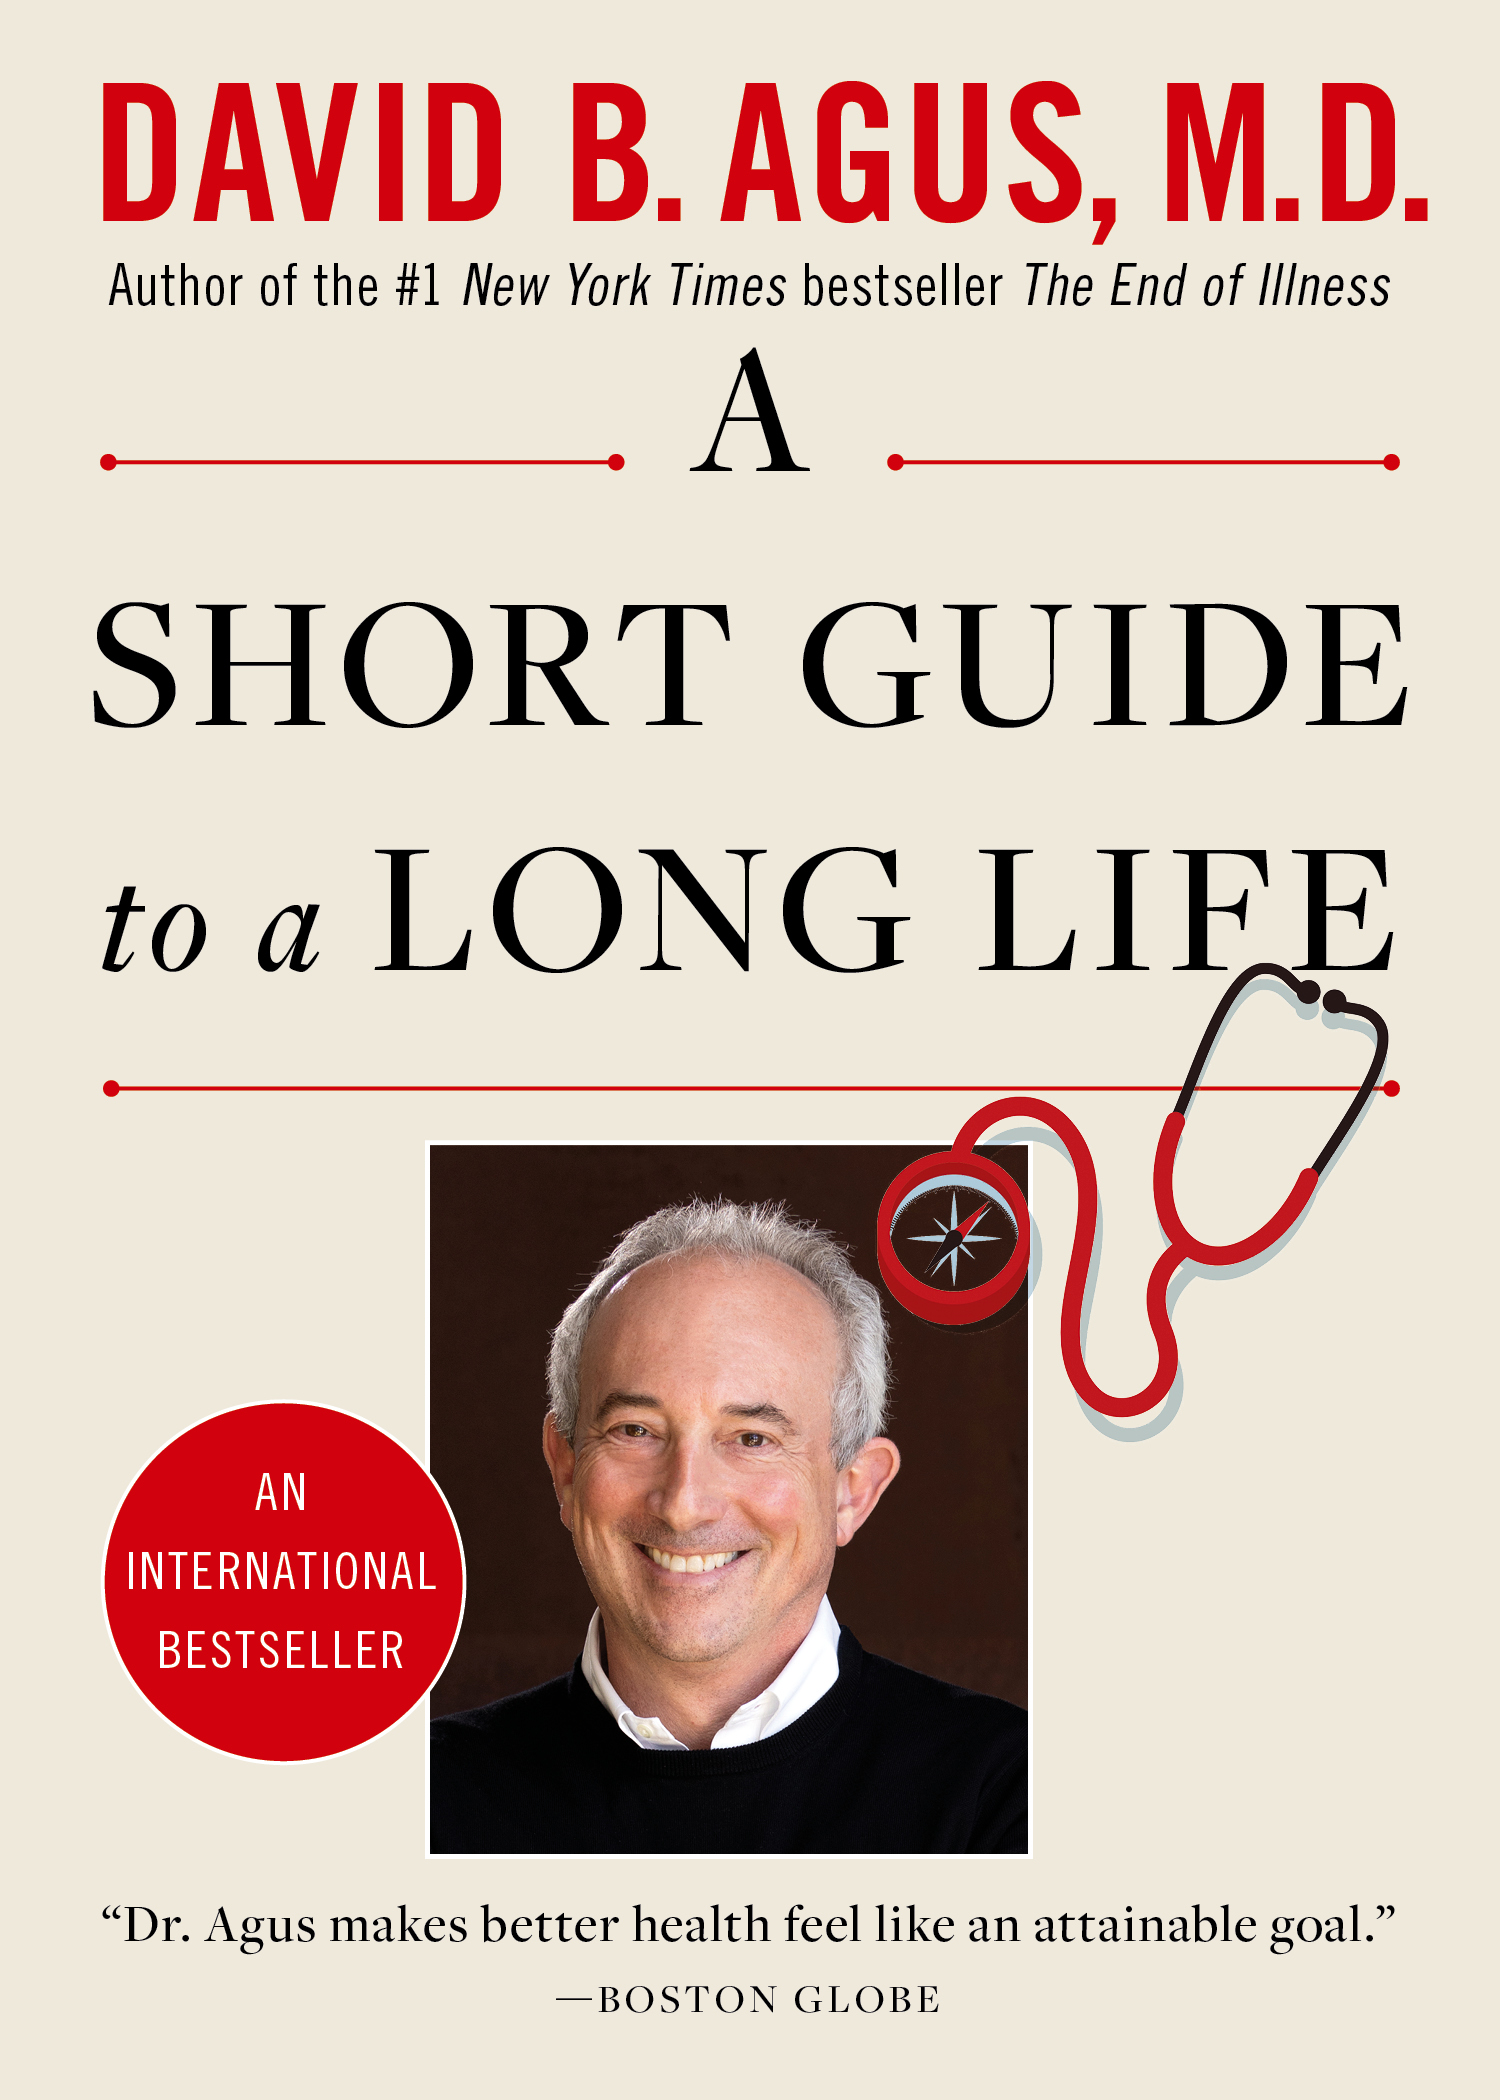 A Short Guide to a Long Life, a book by David B. Agus, M.D.